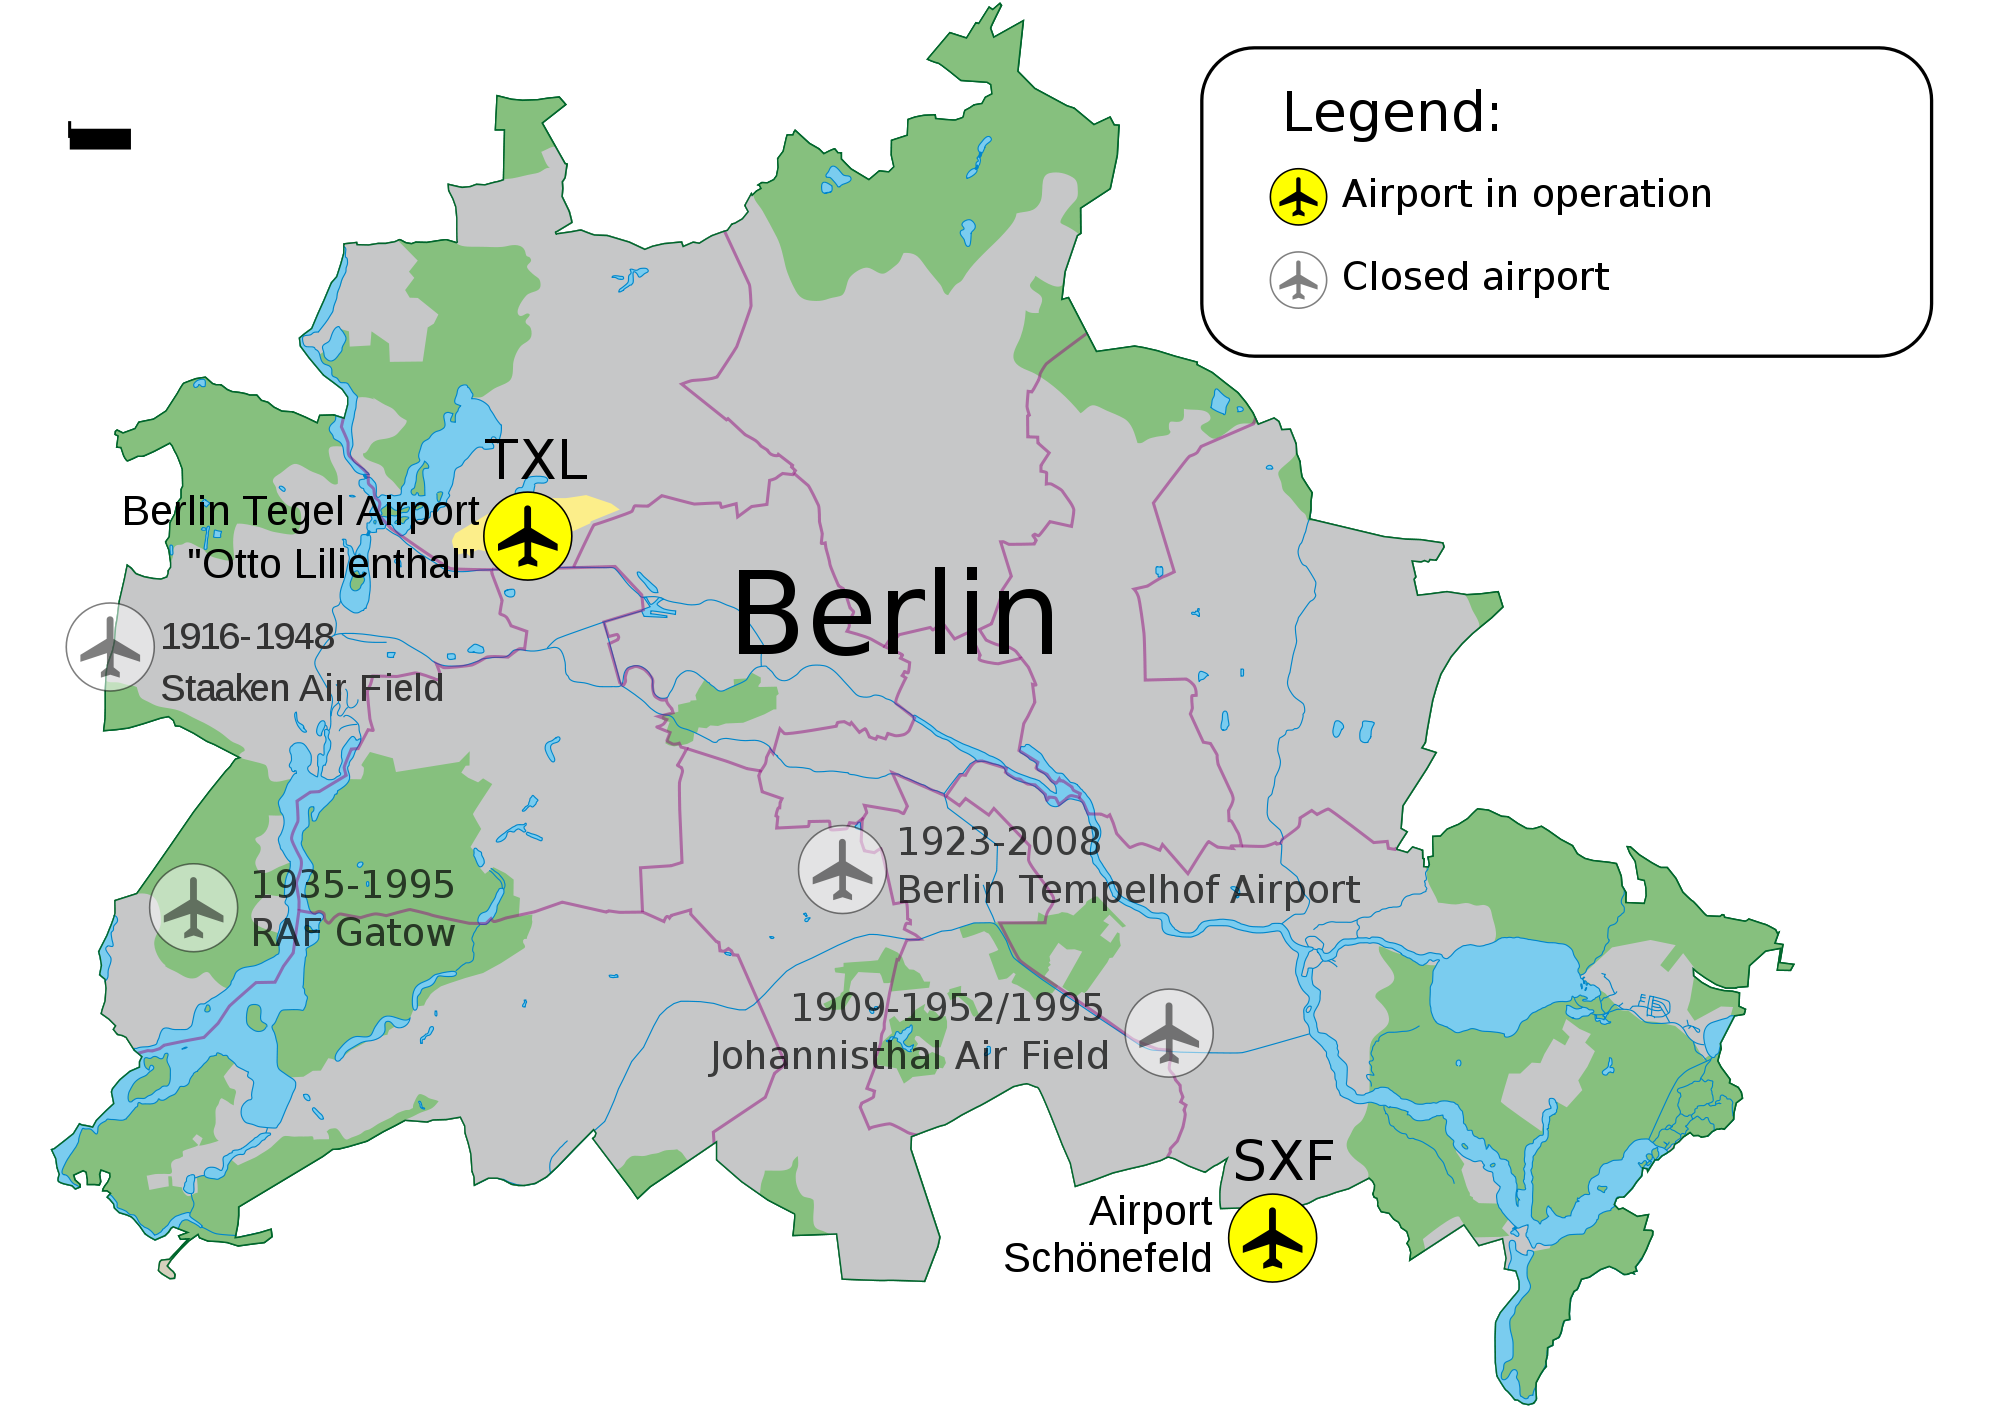 "Berlín en el mapa"